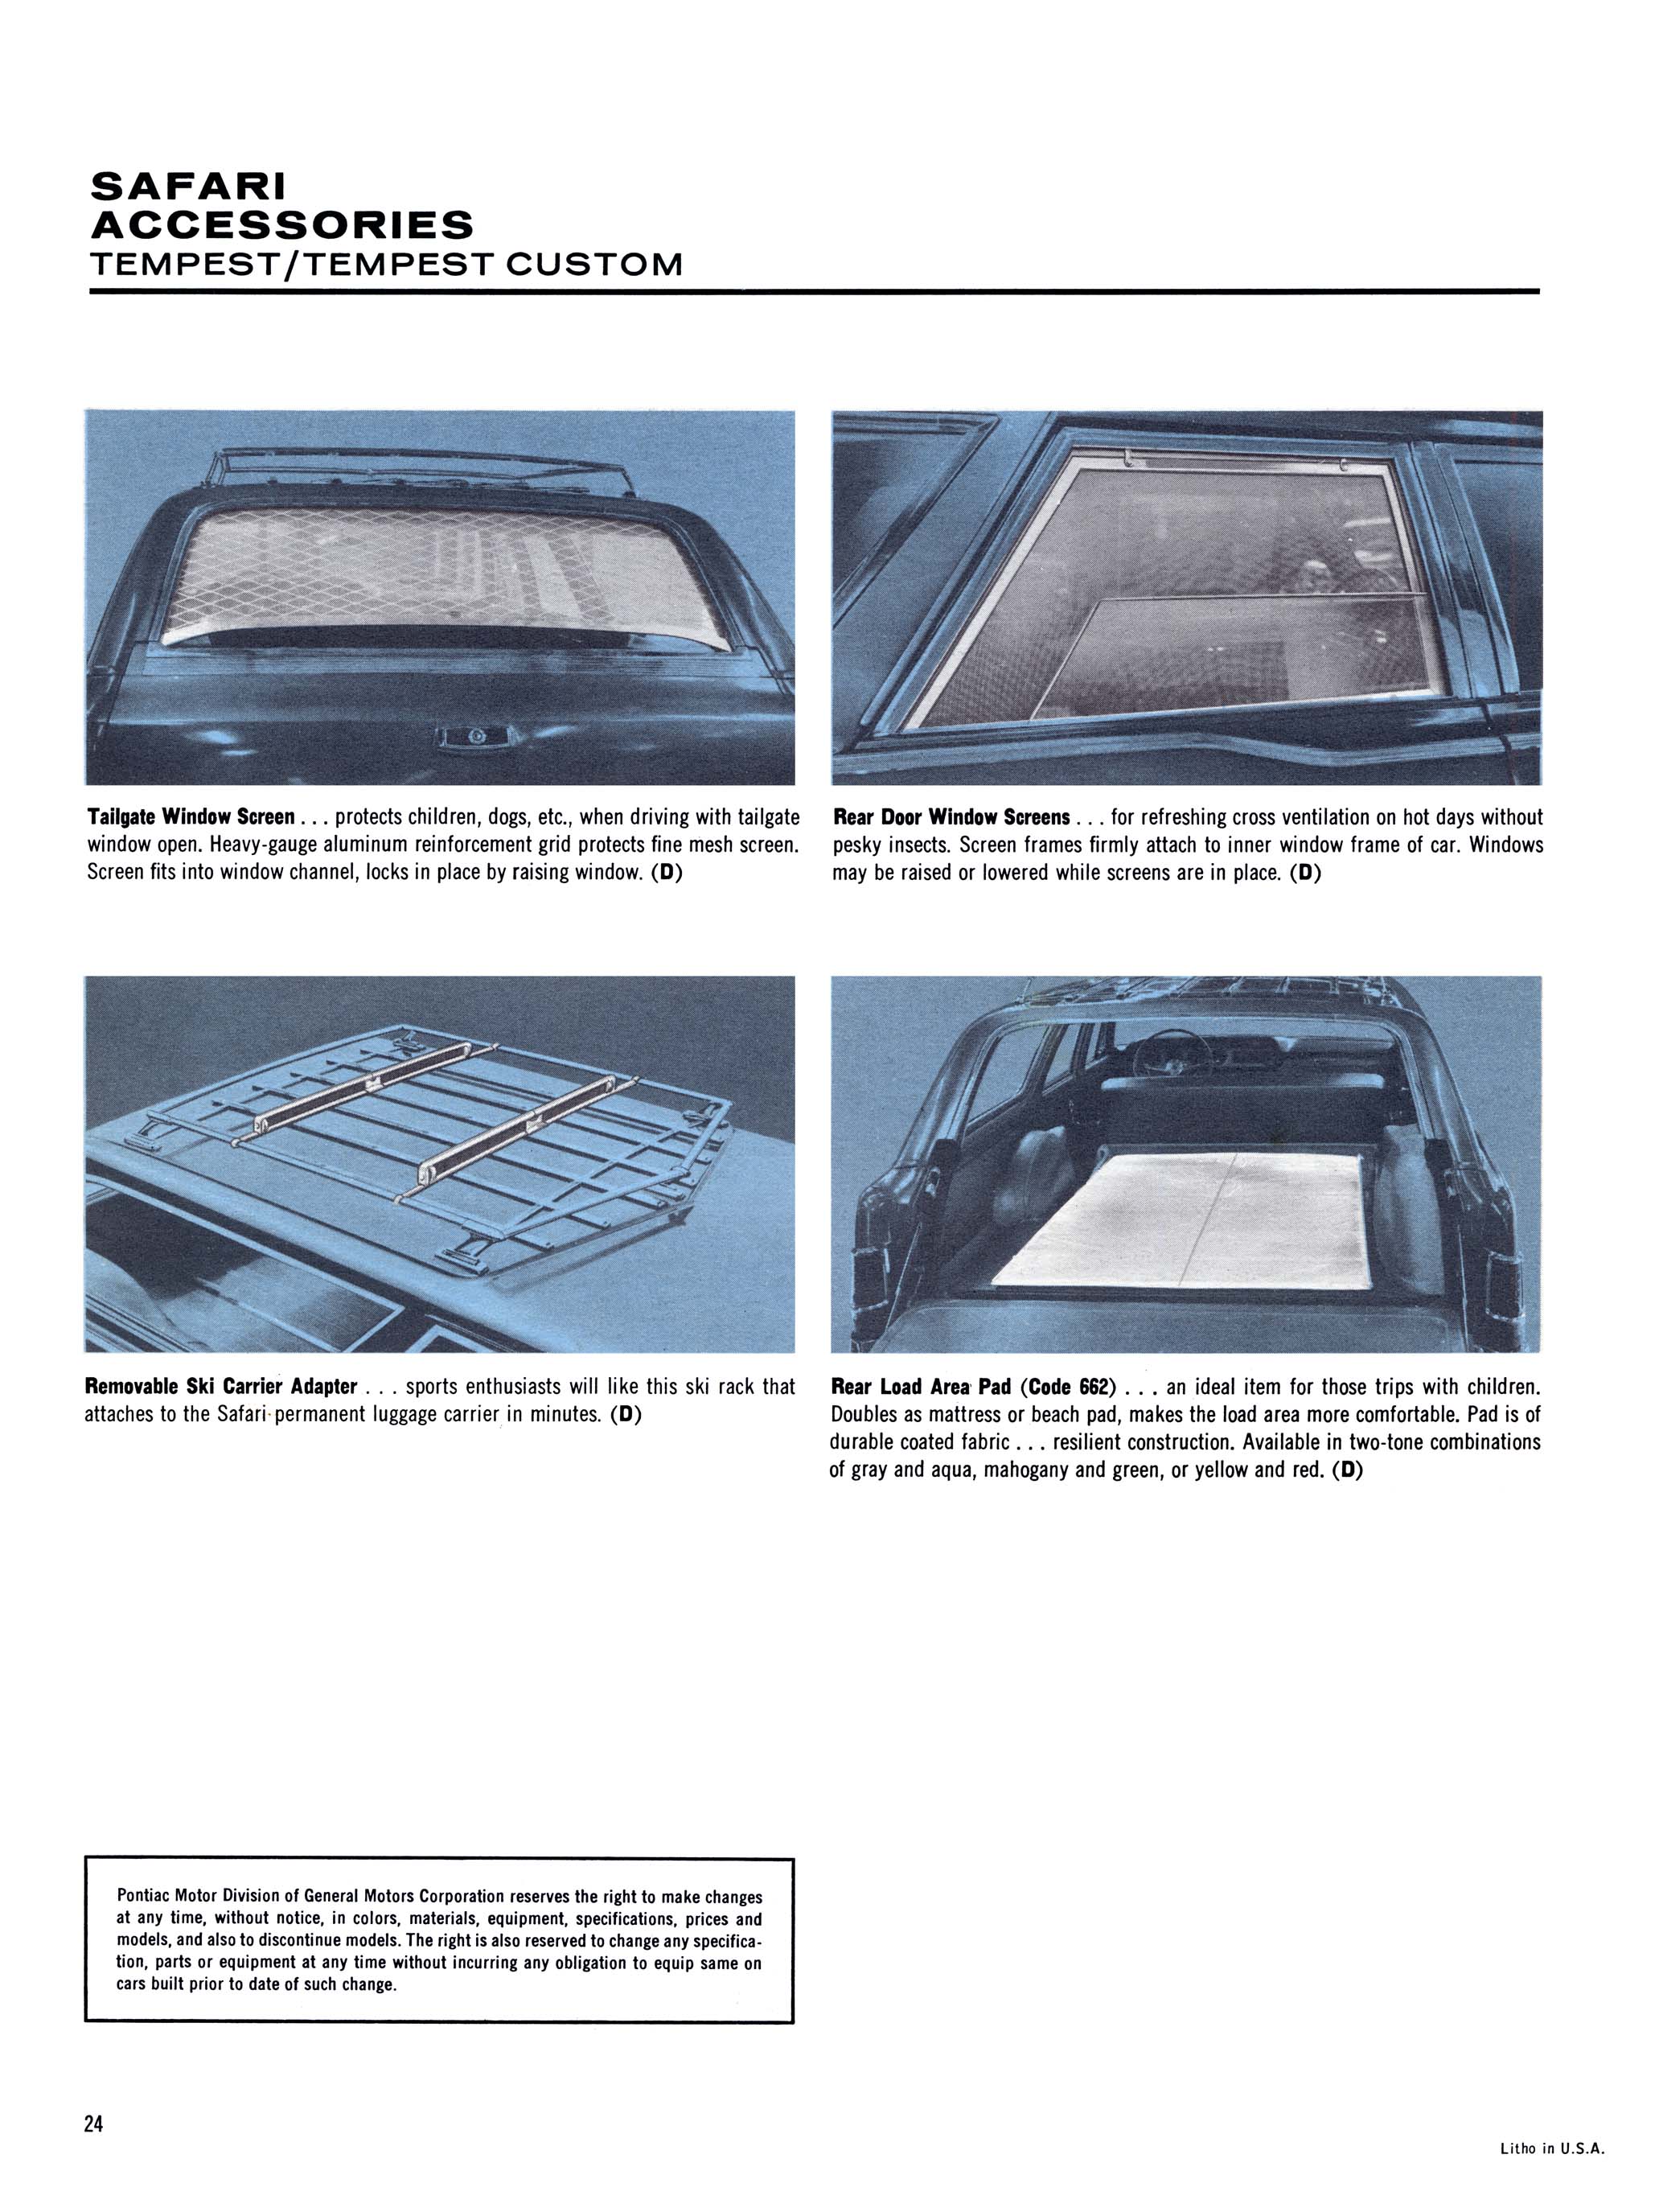 1964_Pontiac_Accessories-24